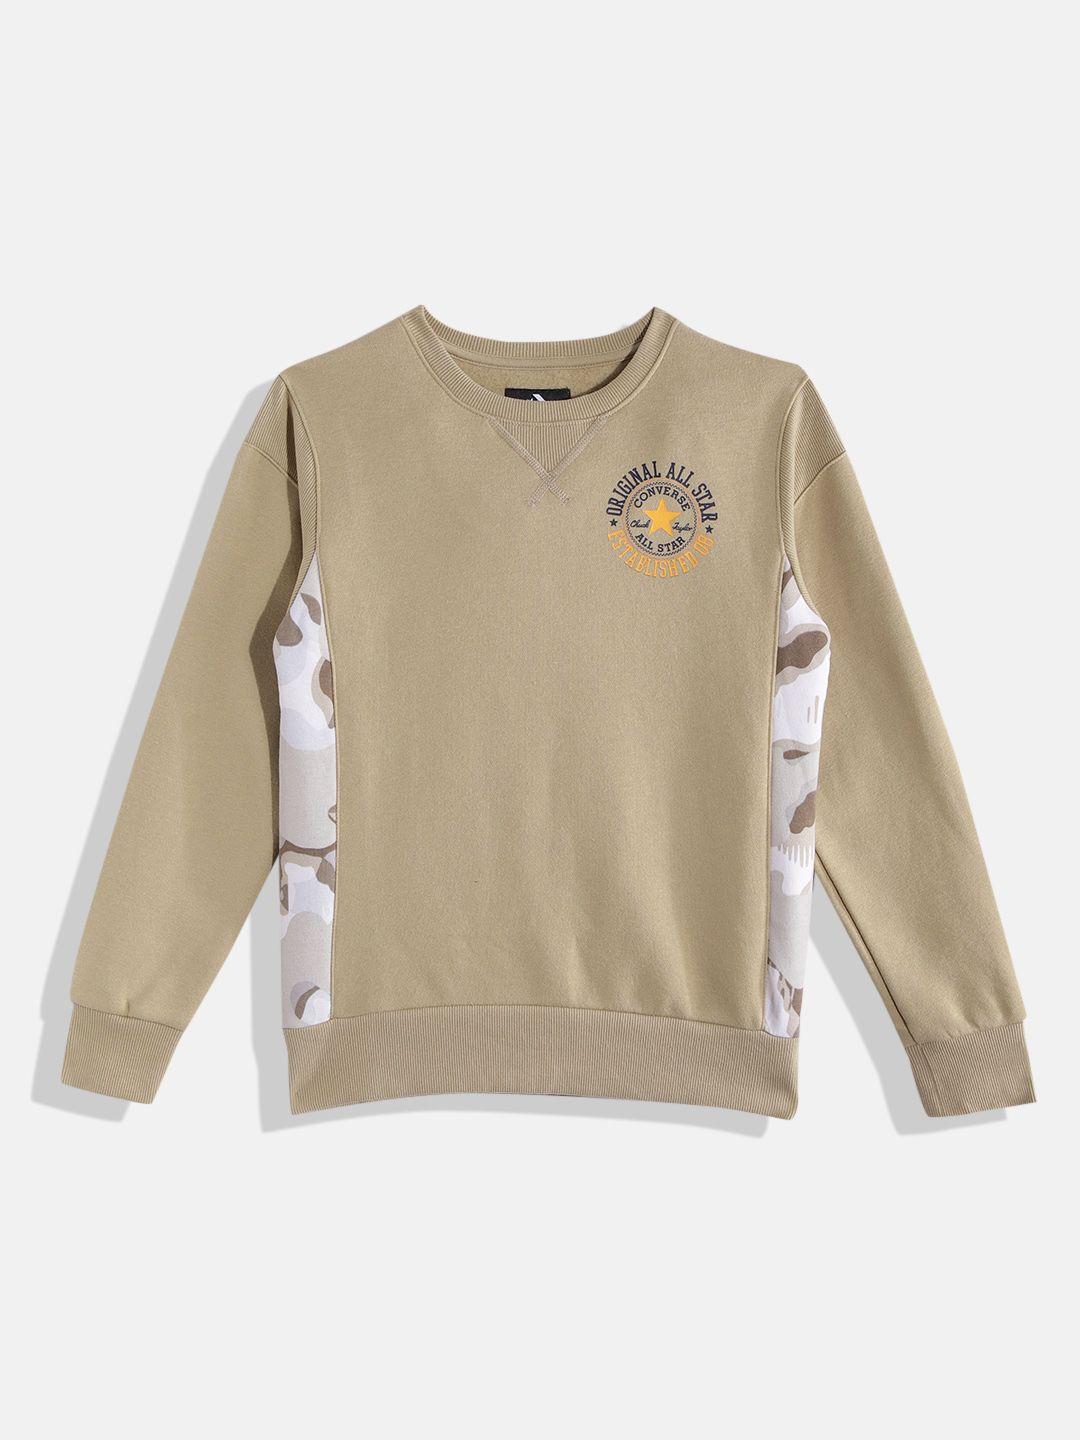 converse boys khaki printed detail sweatshirt